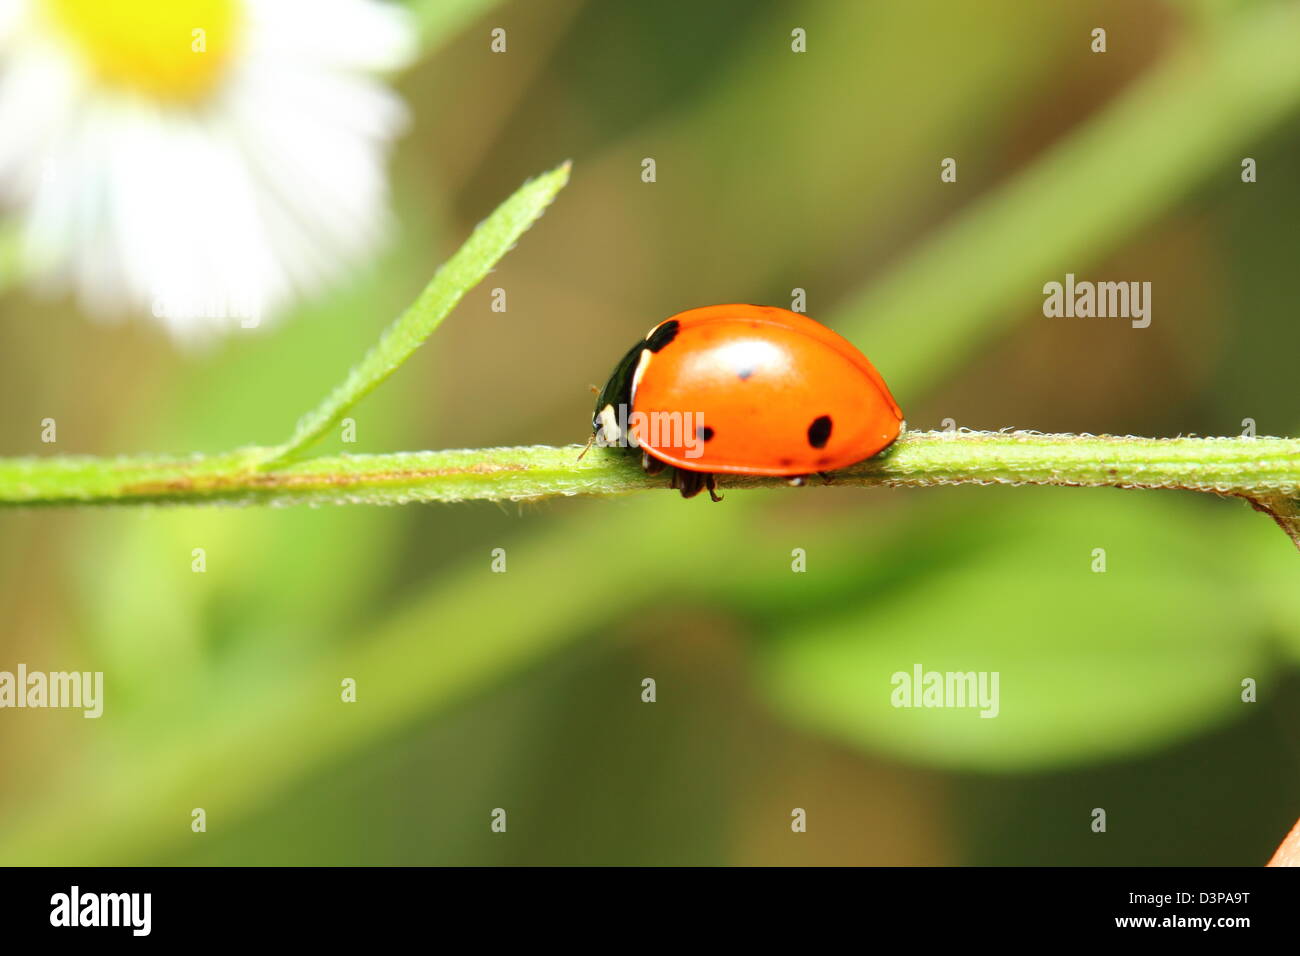 Ladybug en la hoja verde en la naturaleza Foto de stock